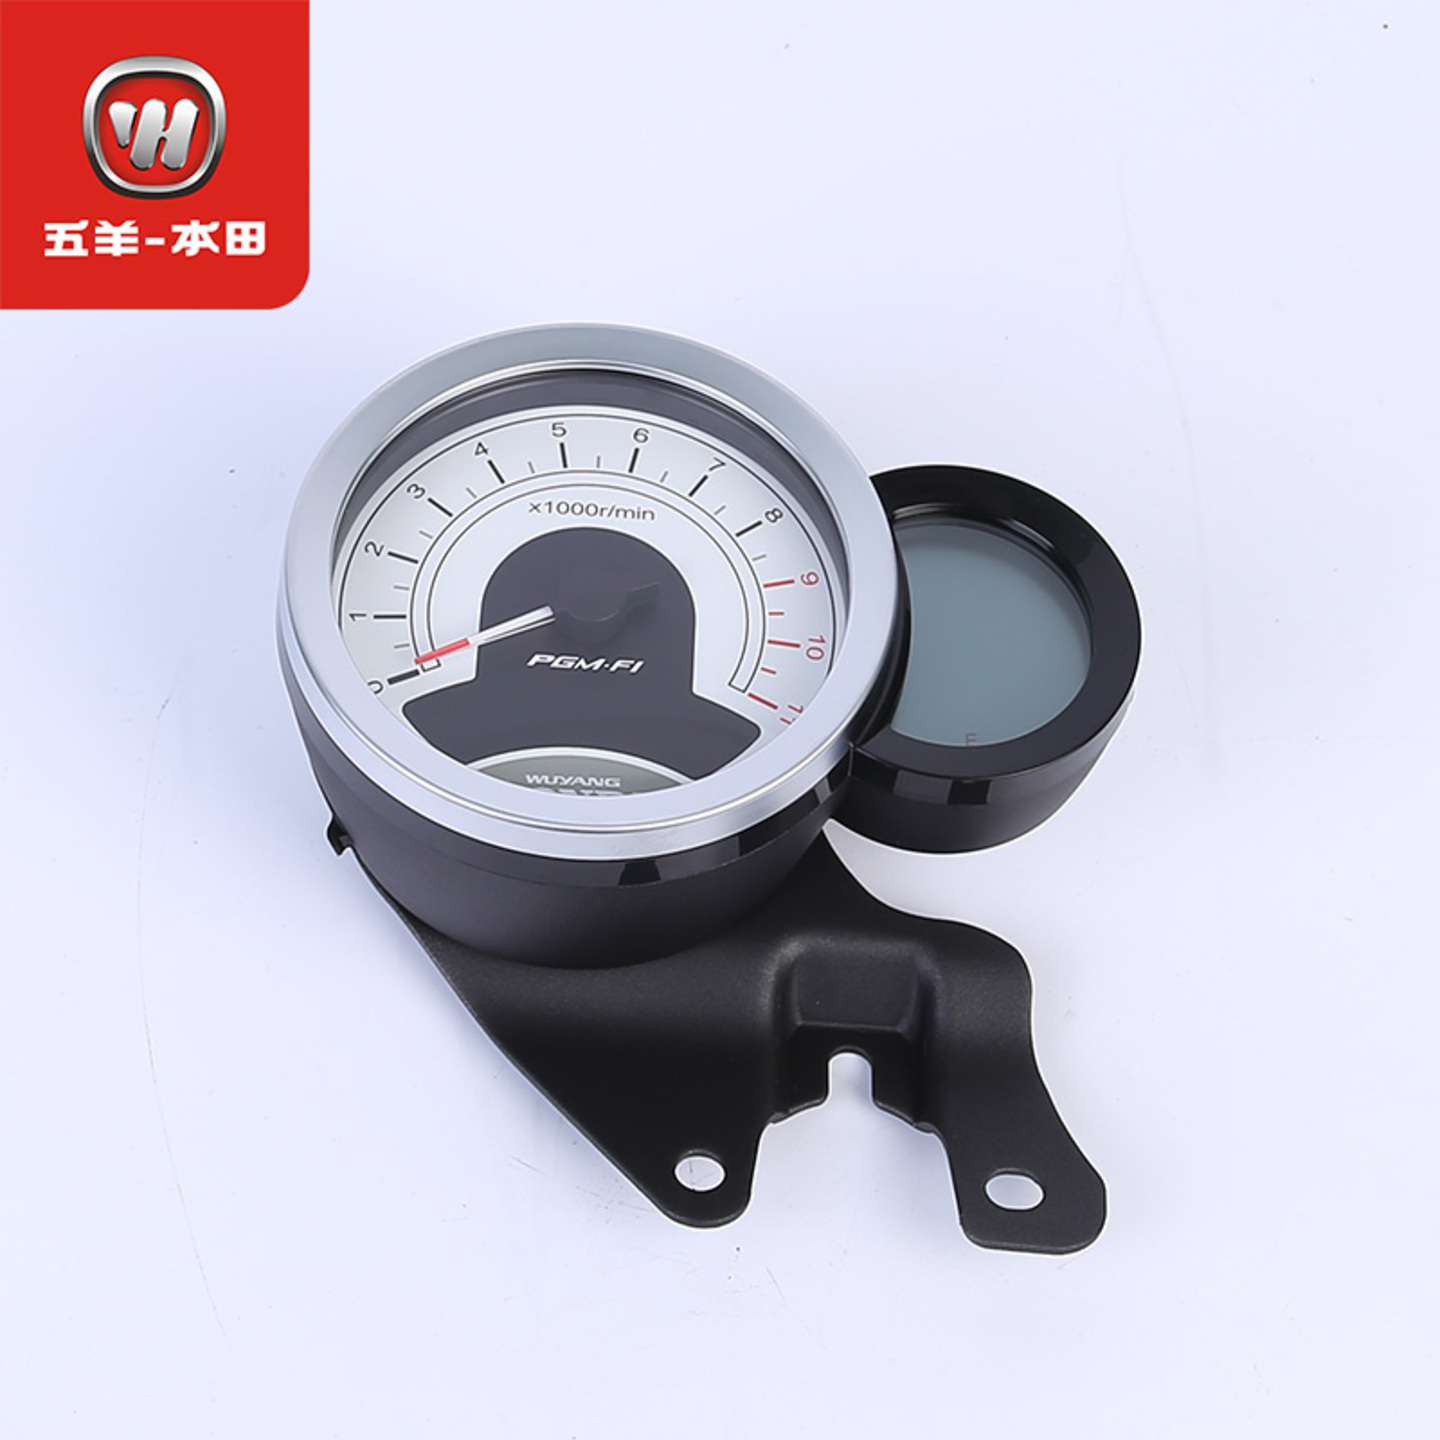 Honda CB190SS speedometer meter LCD meter display assembly